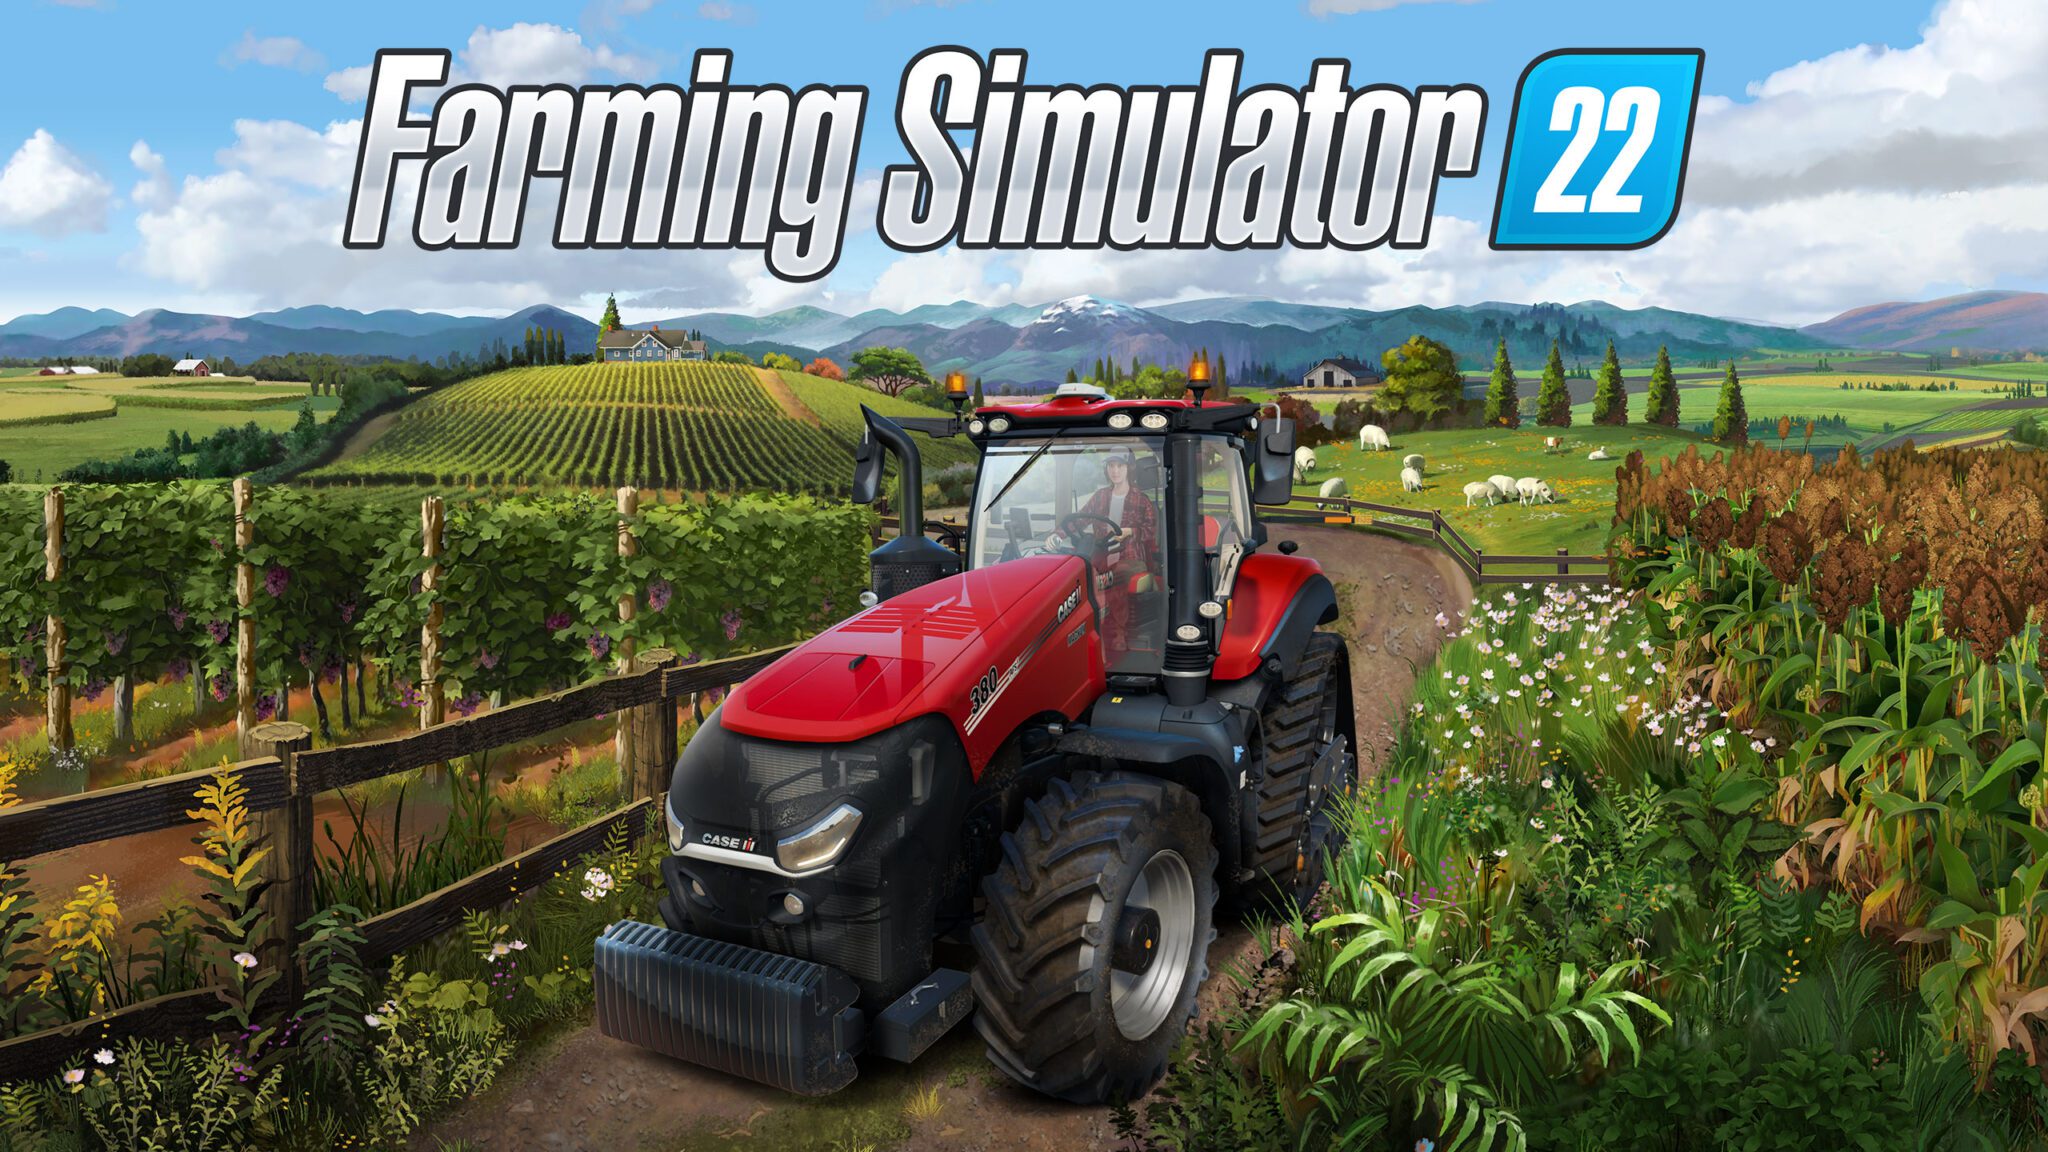 Best Farming Simulator Games On Steam 2022 